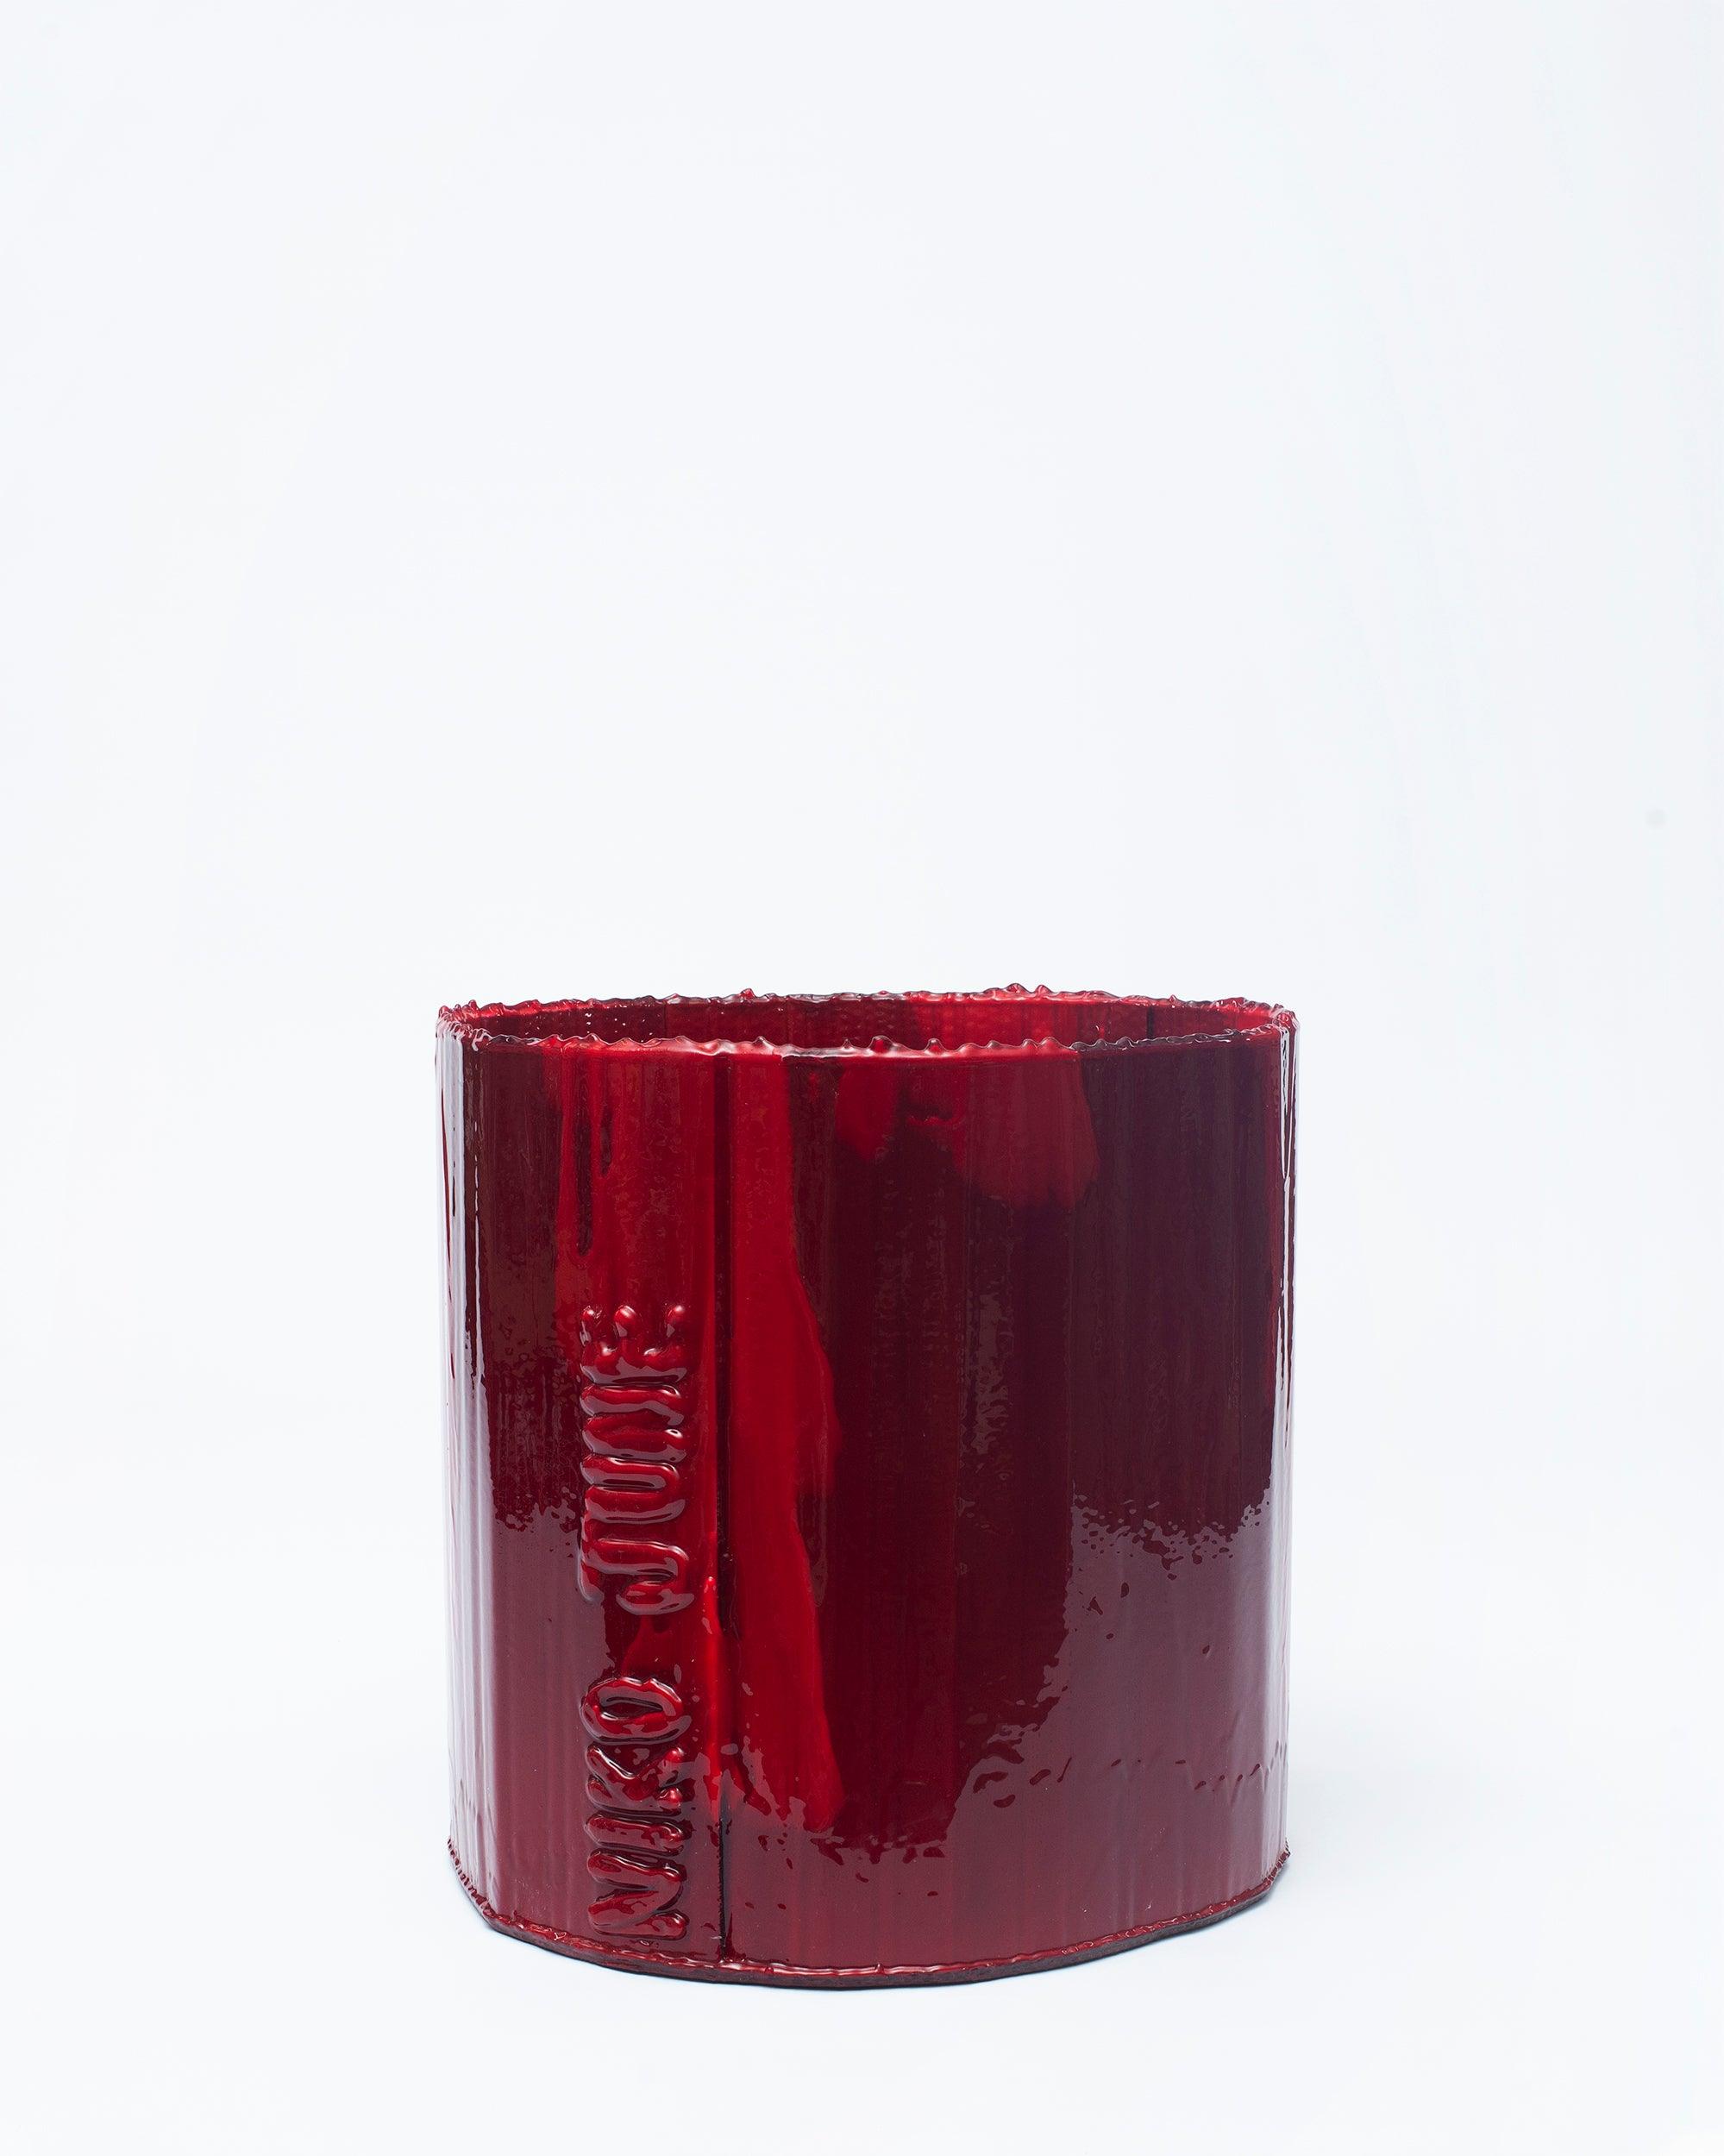 White background, NIKO JUNE logo in handmade organizer object Deep Flex red